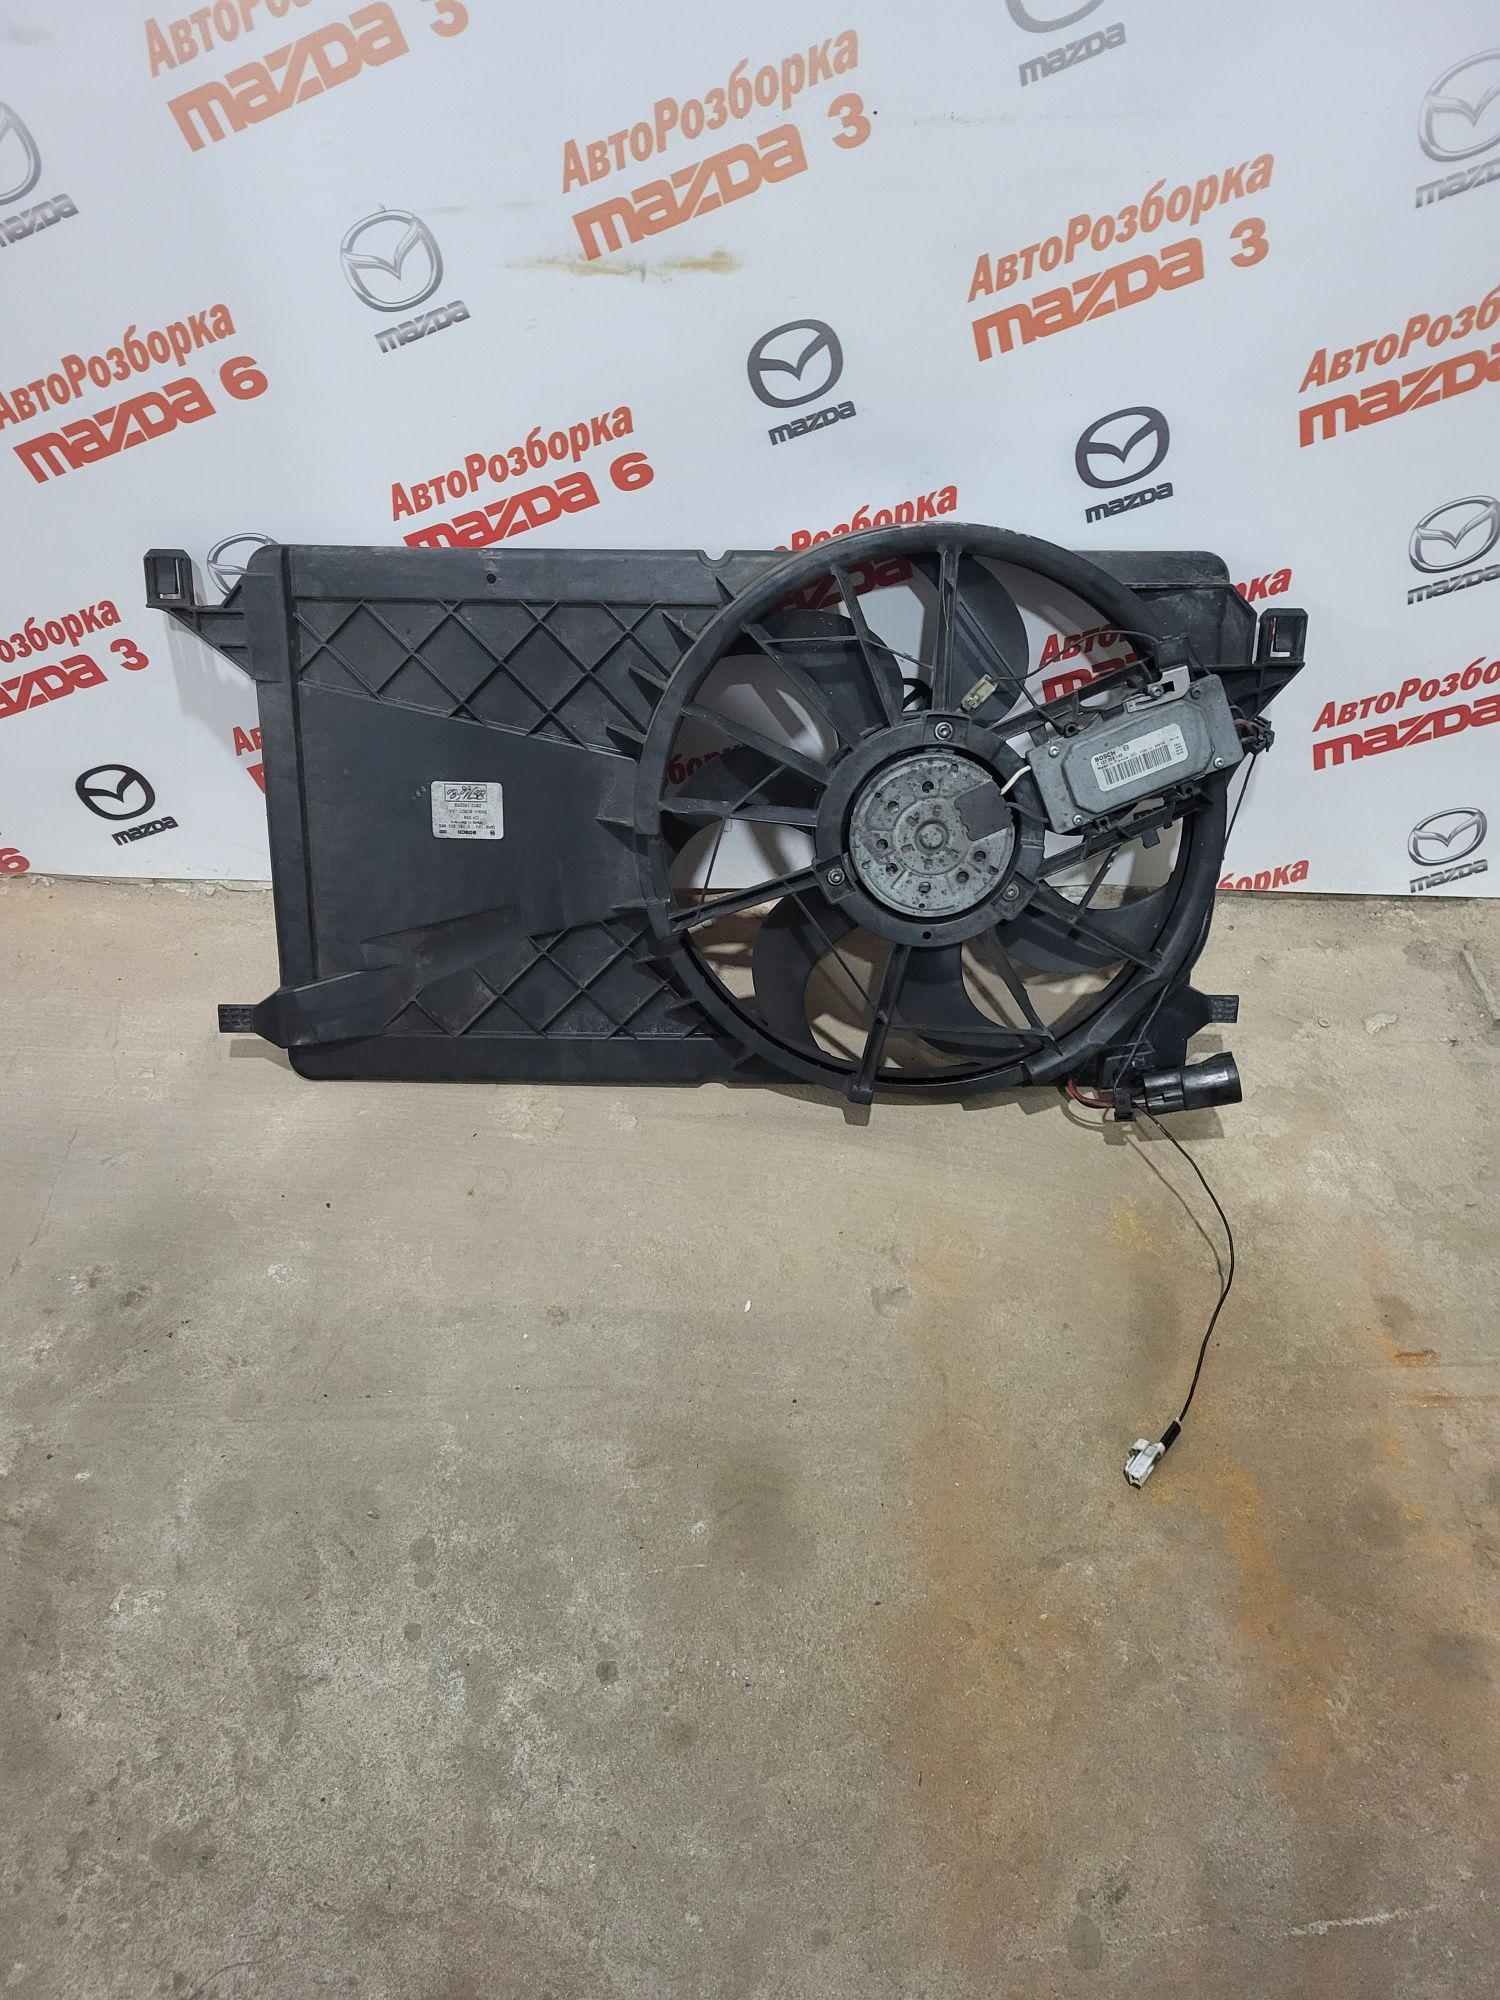 Дифузор з вентилятором Mazda 3 bk вентилятор Мазда 3 бк